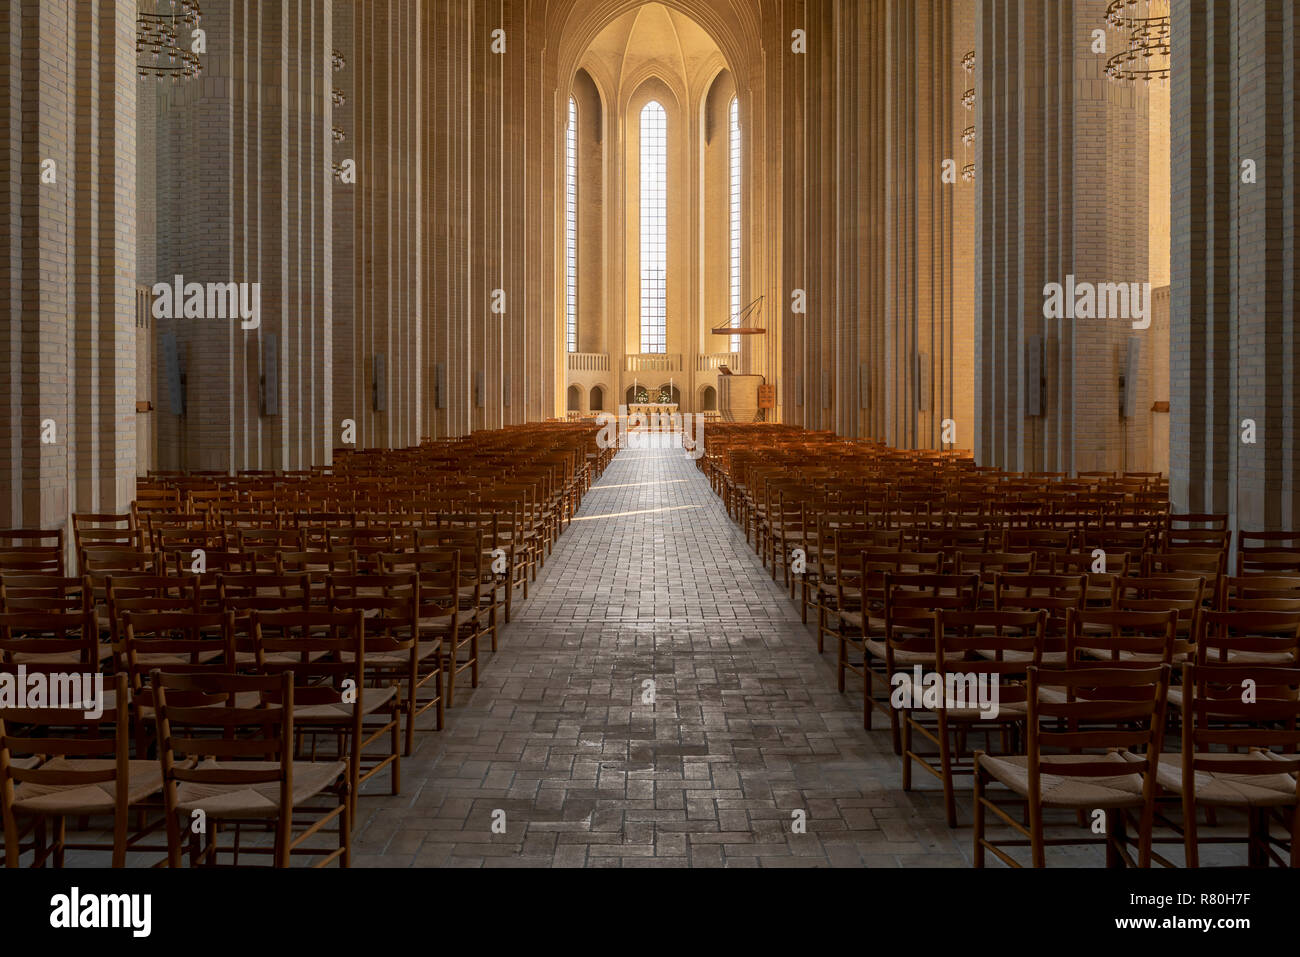 Copenhagen, Denmark - September 18, 2018: Interior of the Grundtvigs church (kirke) with brick pillars, sunlight and chairs. Stock Photo